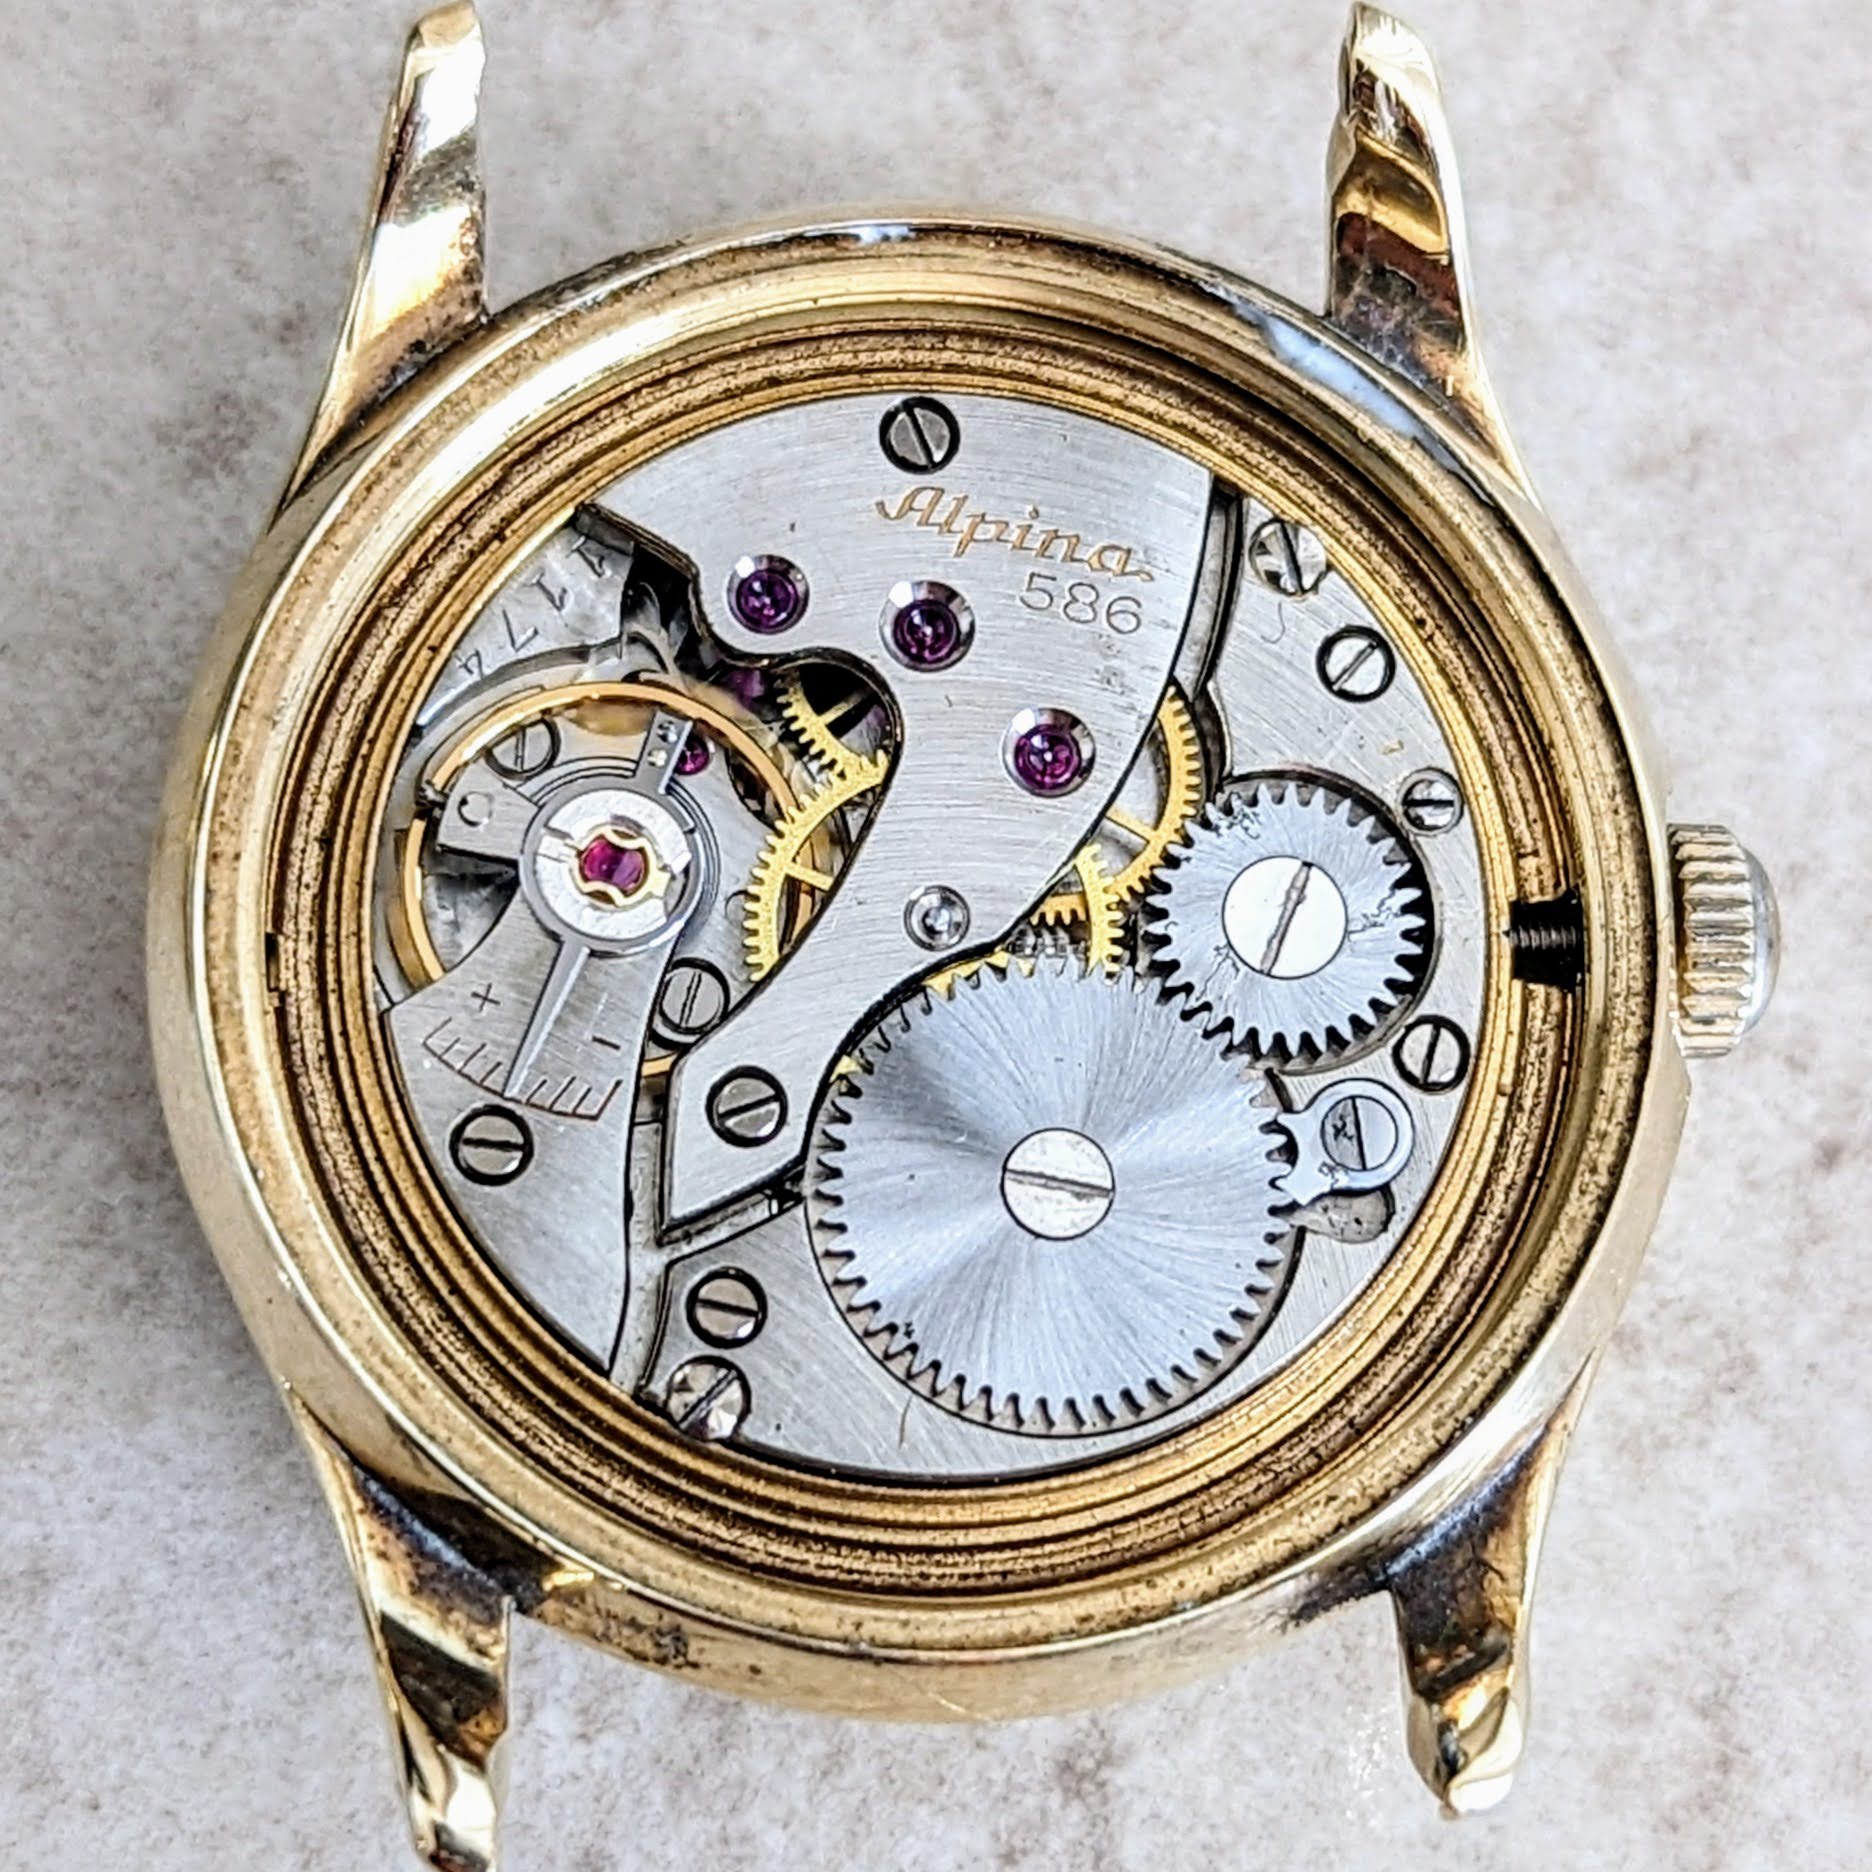 1940s ALPINA Watch 14K GOLD Vintage Wristwatch - Rose Gold Dial - Original BOX!